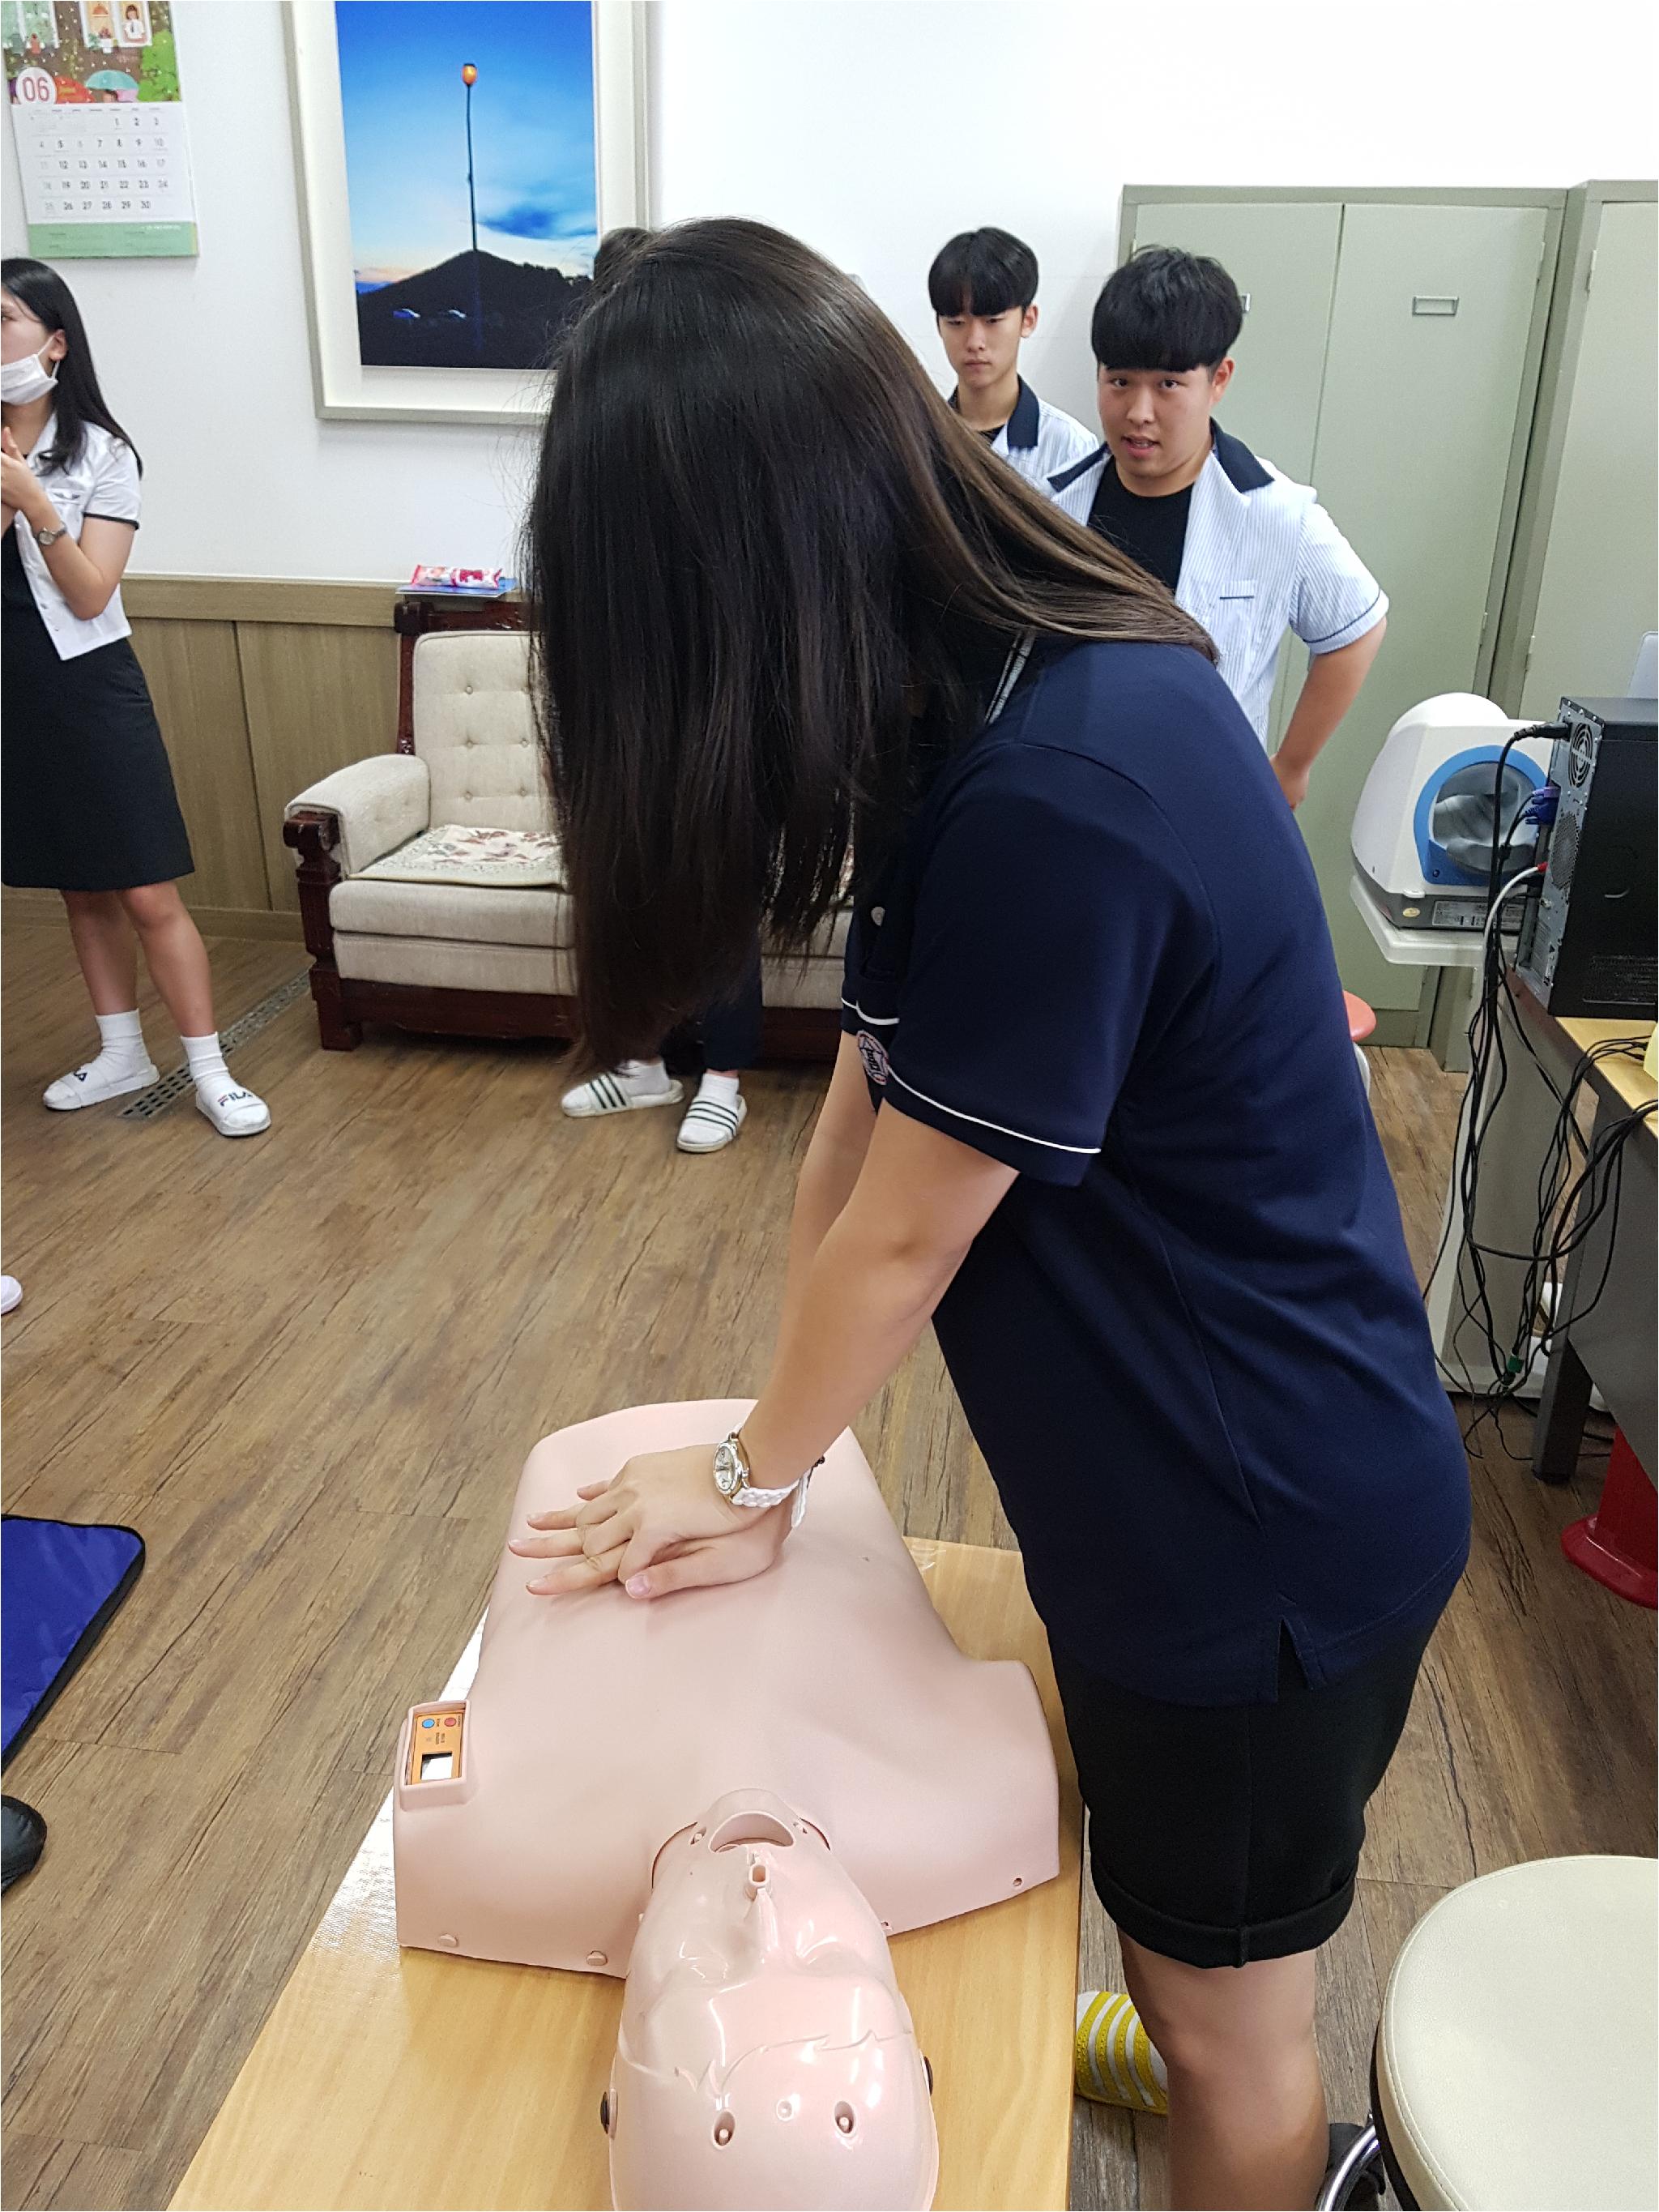 CPR 실습 1